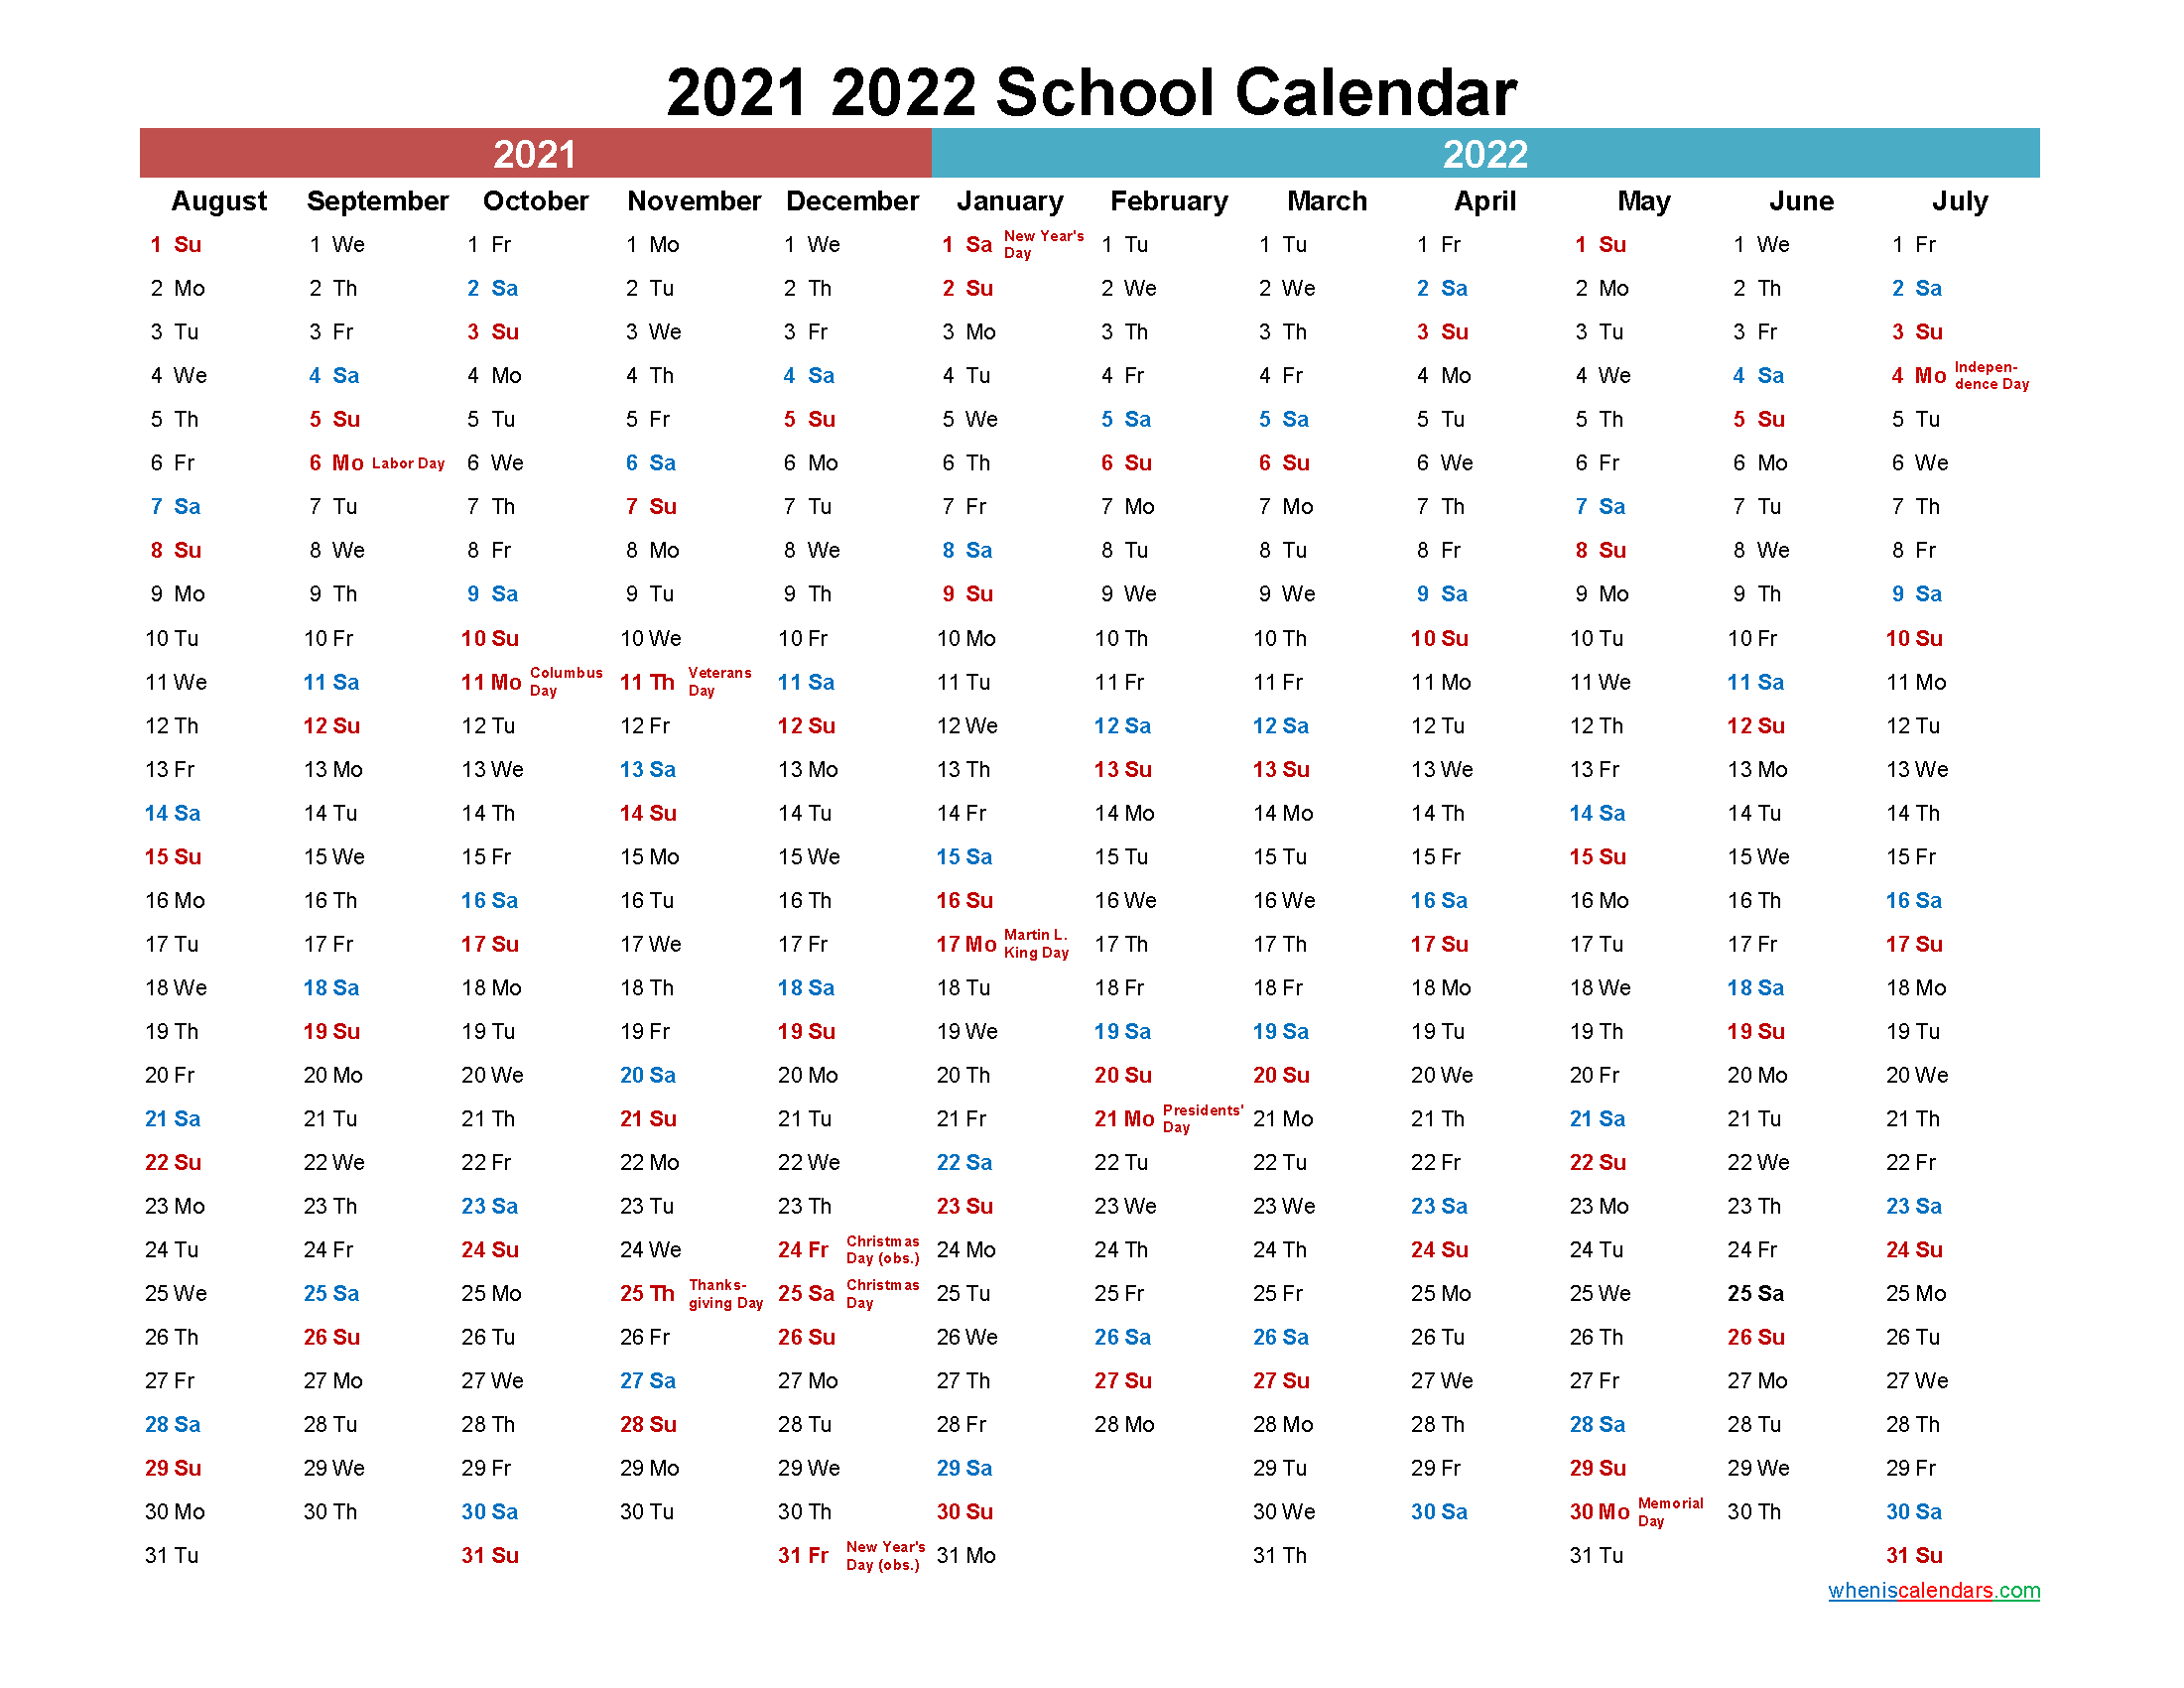 2021 and 2022 School Calendar Printable - Template No.22scl35